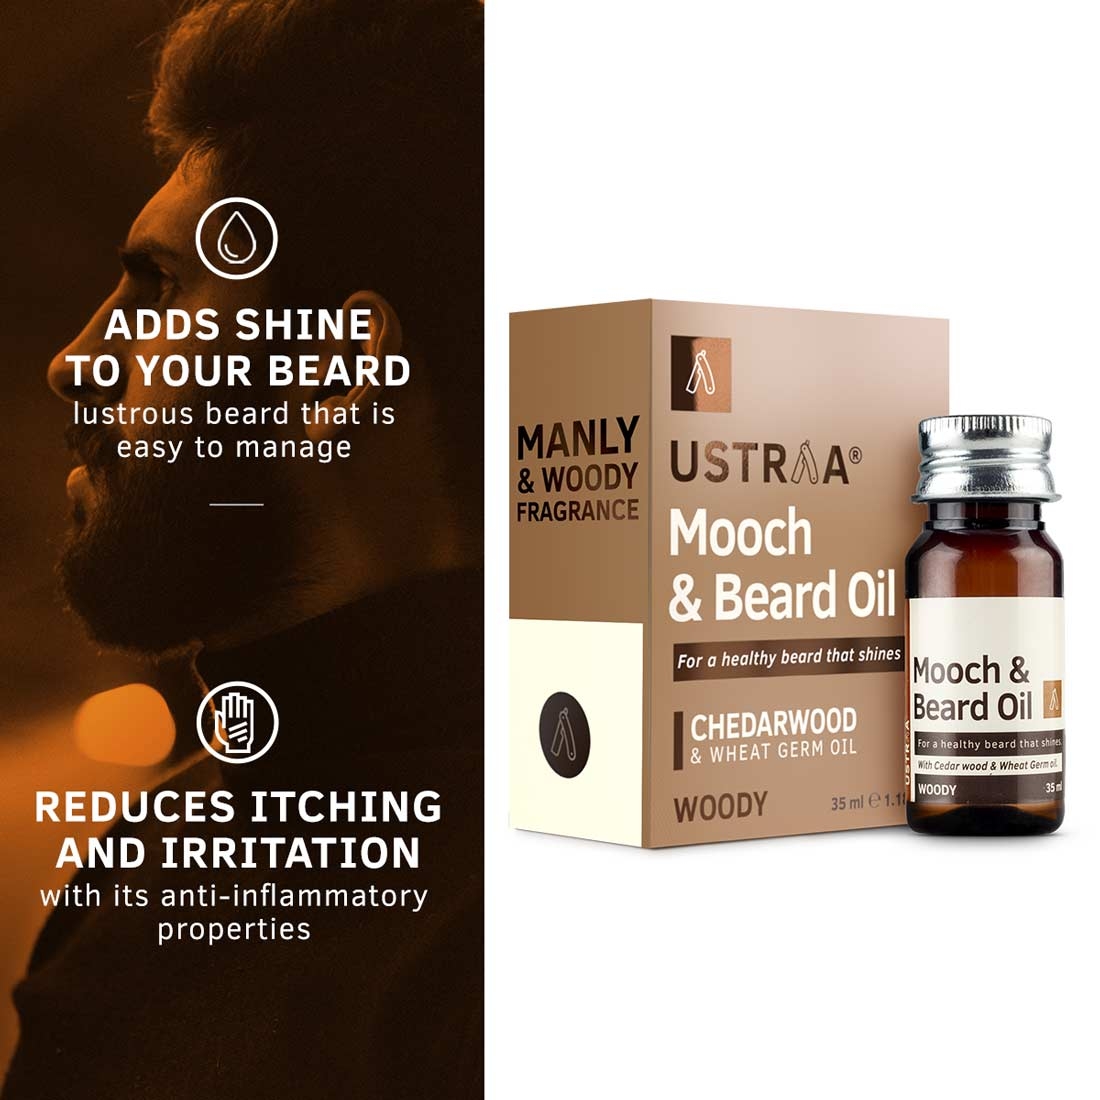 Ustraa | Mooch & Beard Oil - Woody (Pack of 2 x 35 ml) 1